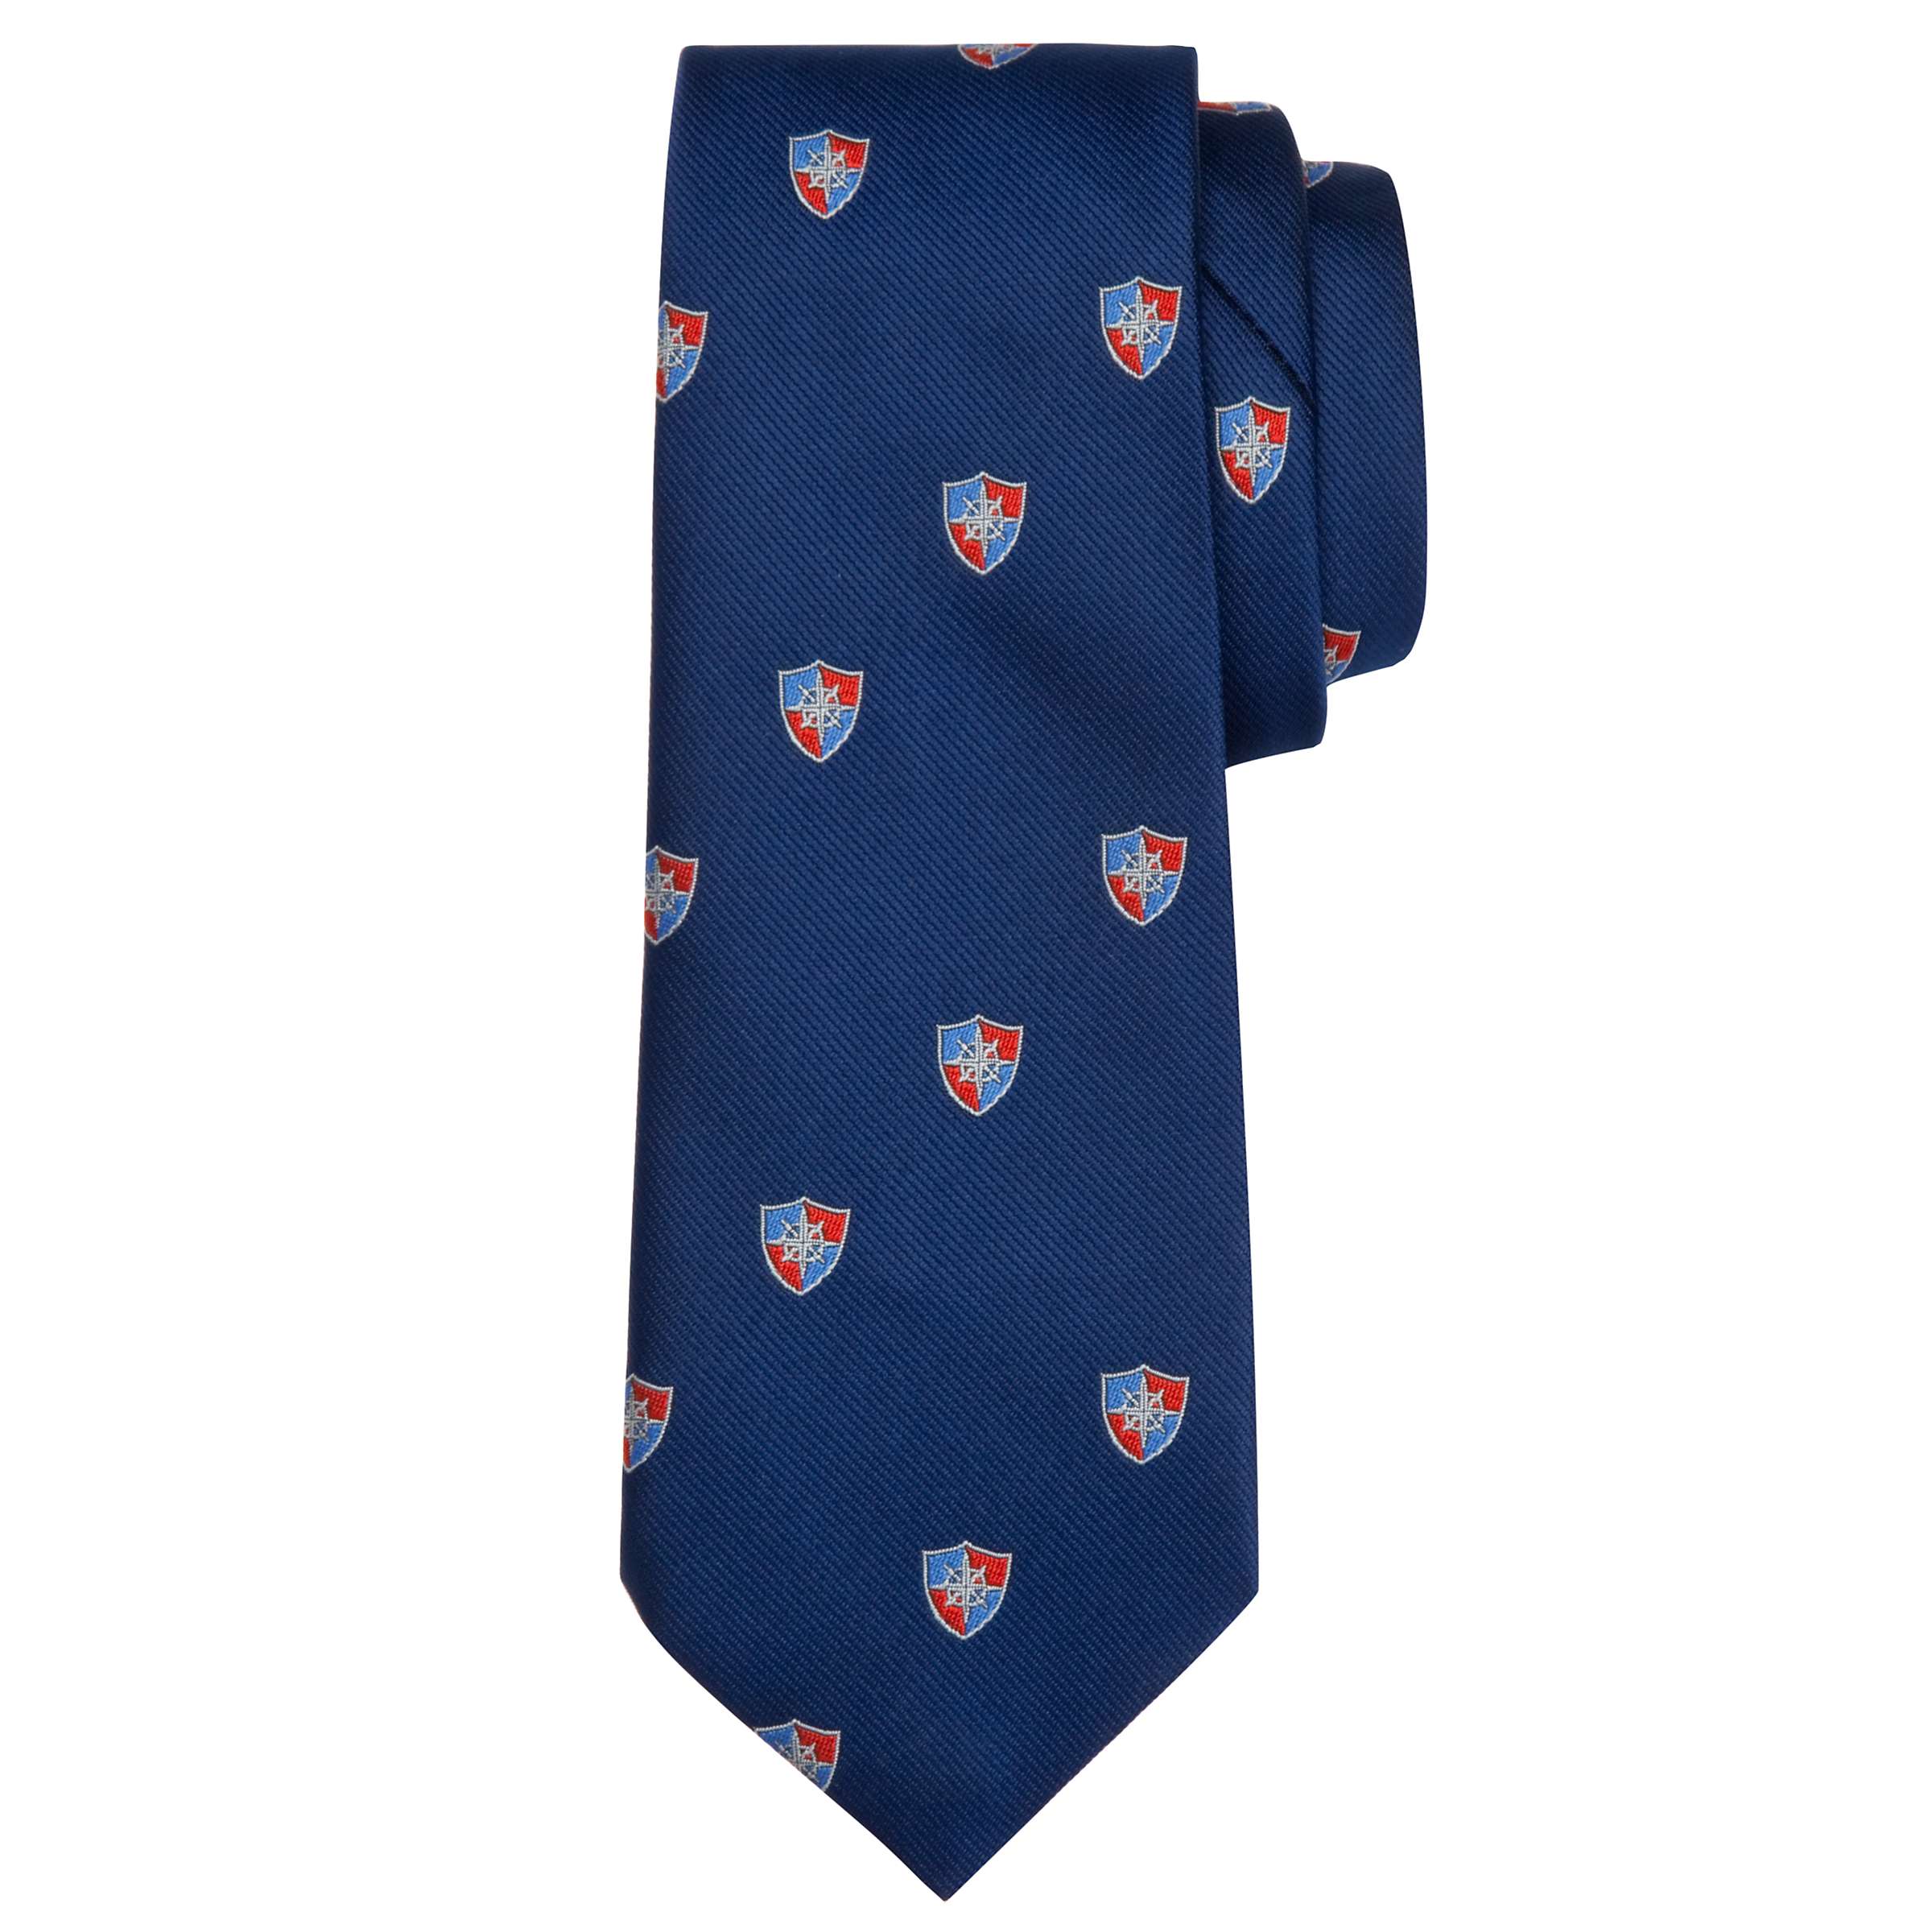 Buy Fairley House School Junior and Senior Boys' Tie, Blue Online at johnlewis.com